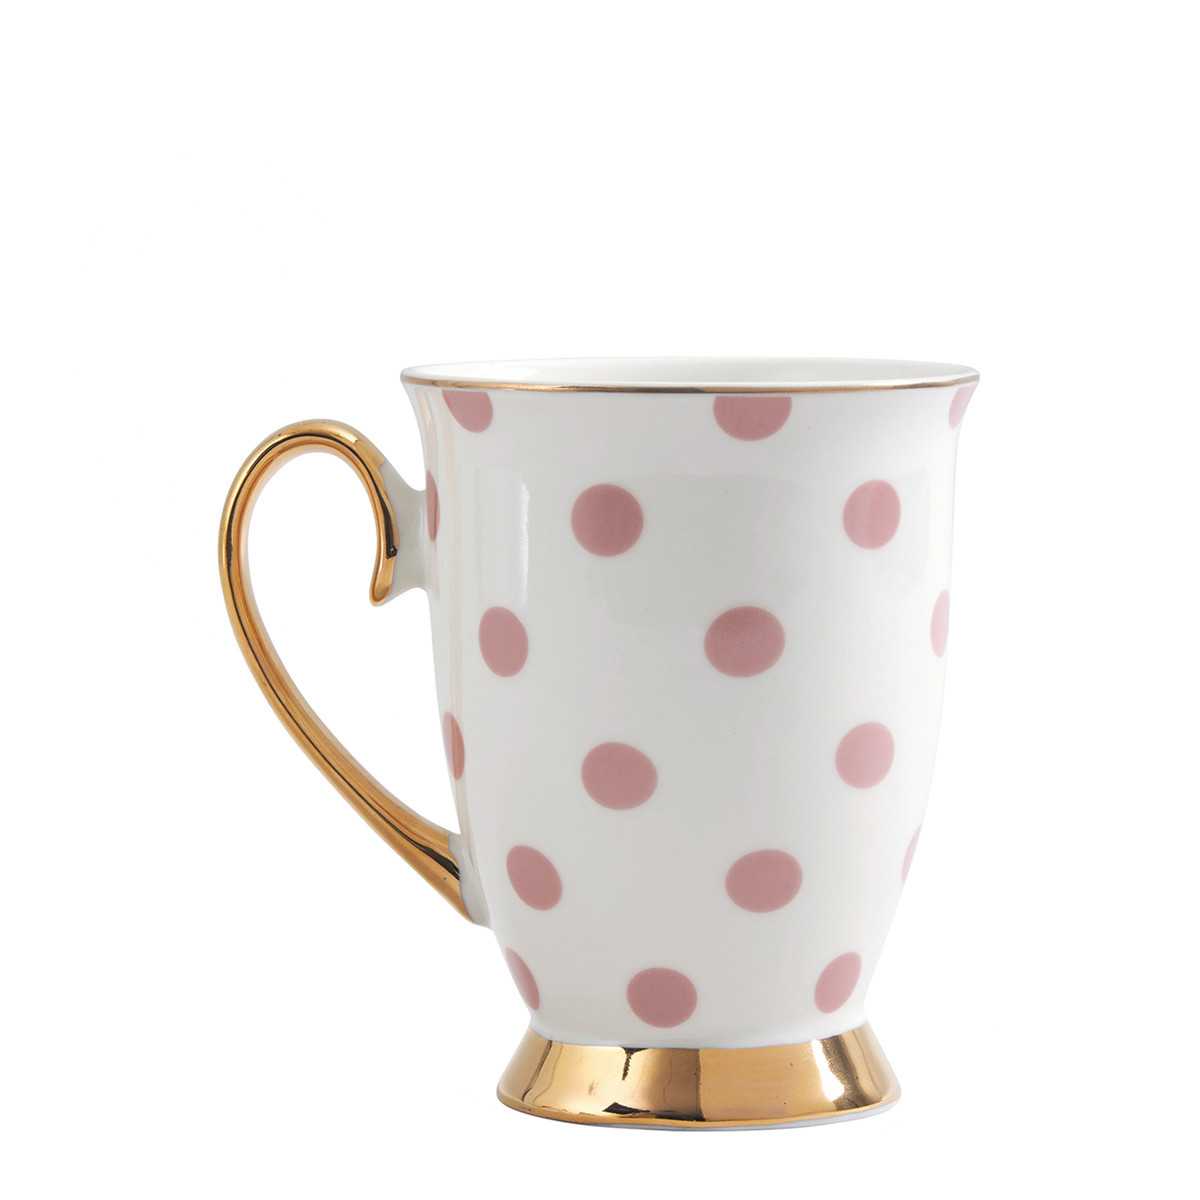 Madame de Récamier Mug Pink polka dots